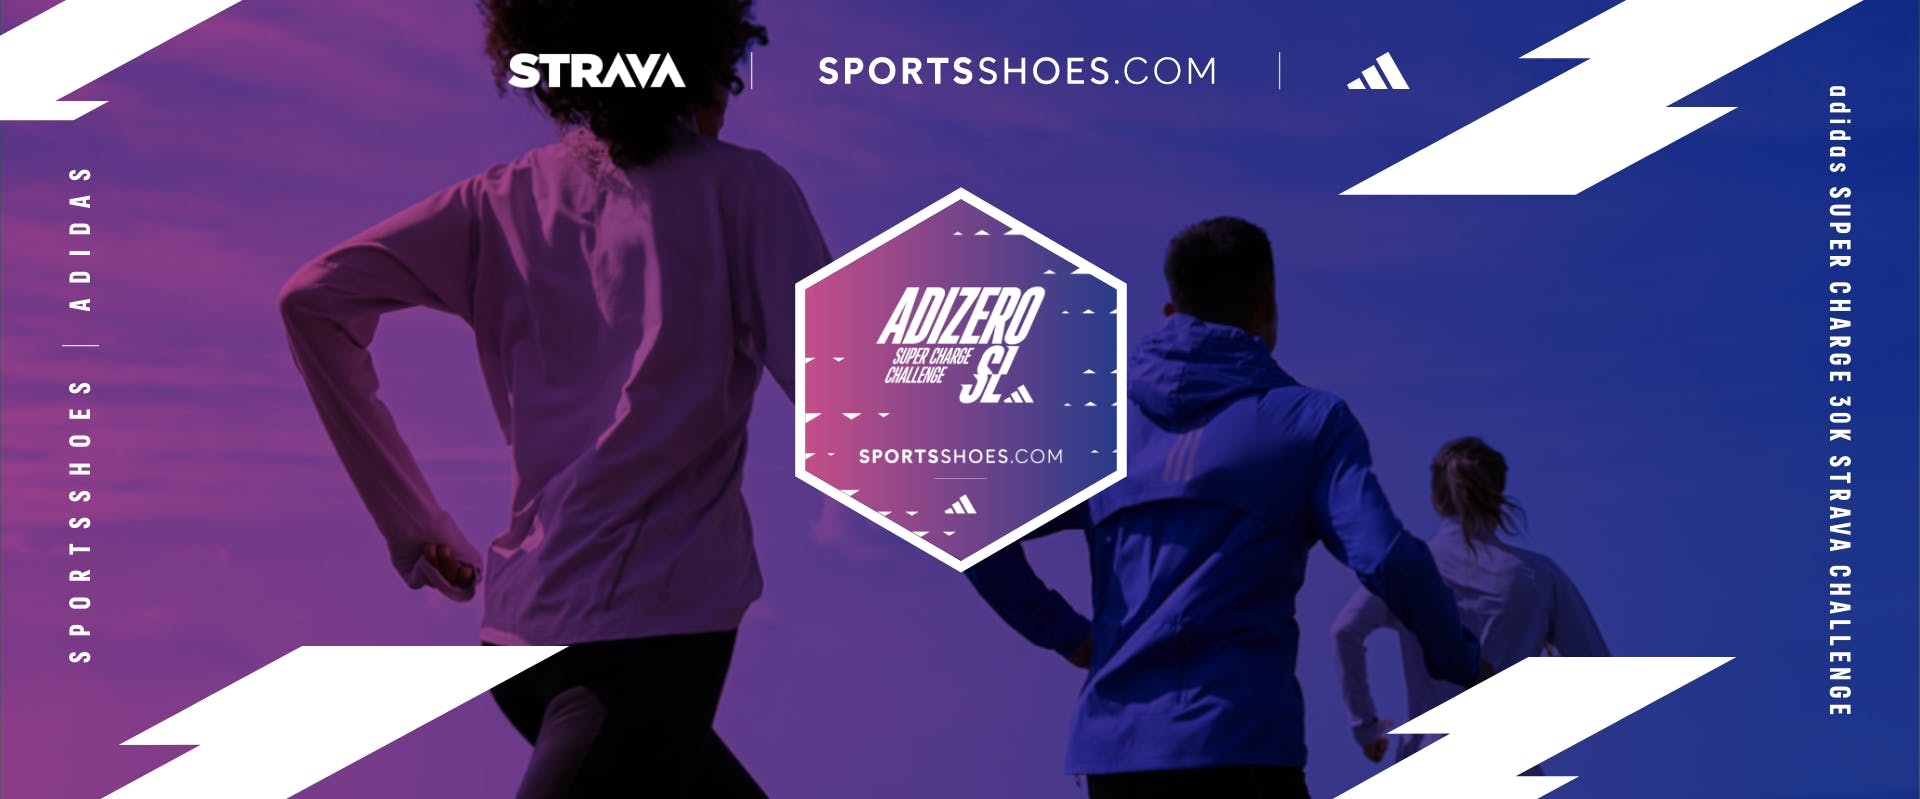 sportsshoes-strava-adidas-supercharge-30k-challenge-adizero-sl